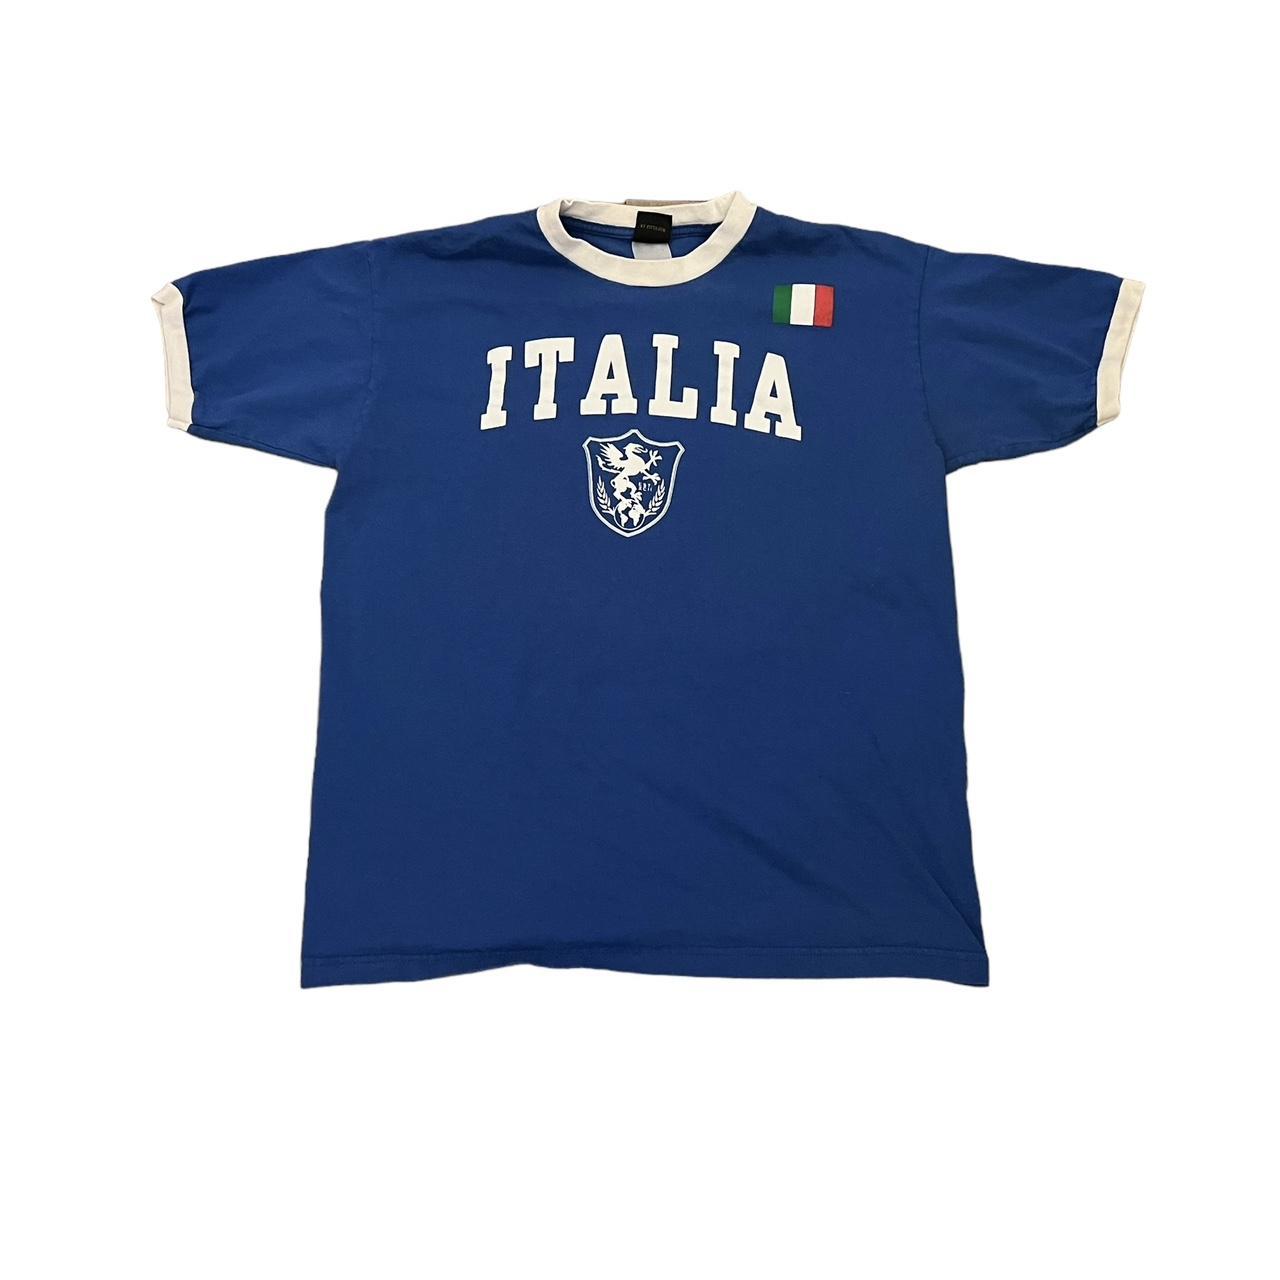 italia cotton jersey tshirt size marked: M best fit... - Depop